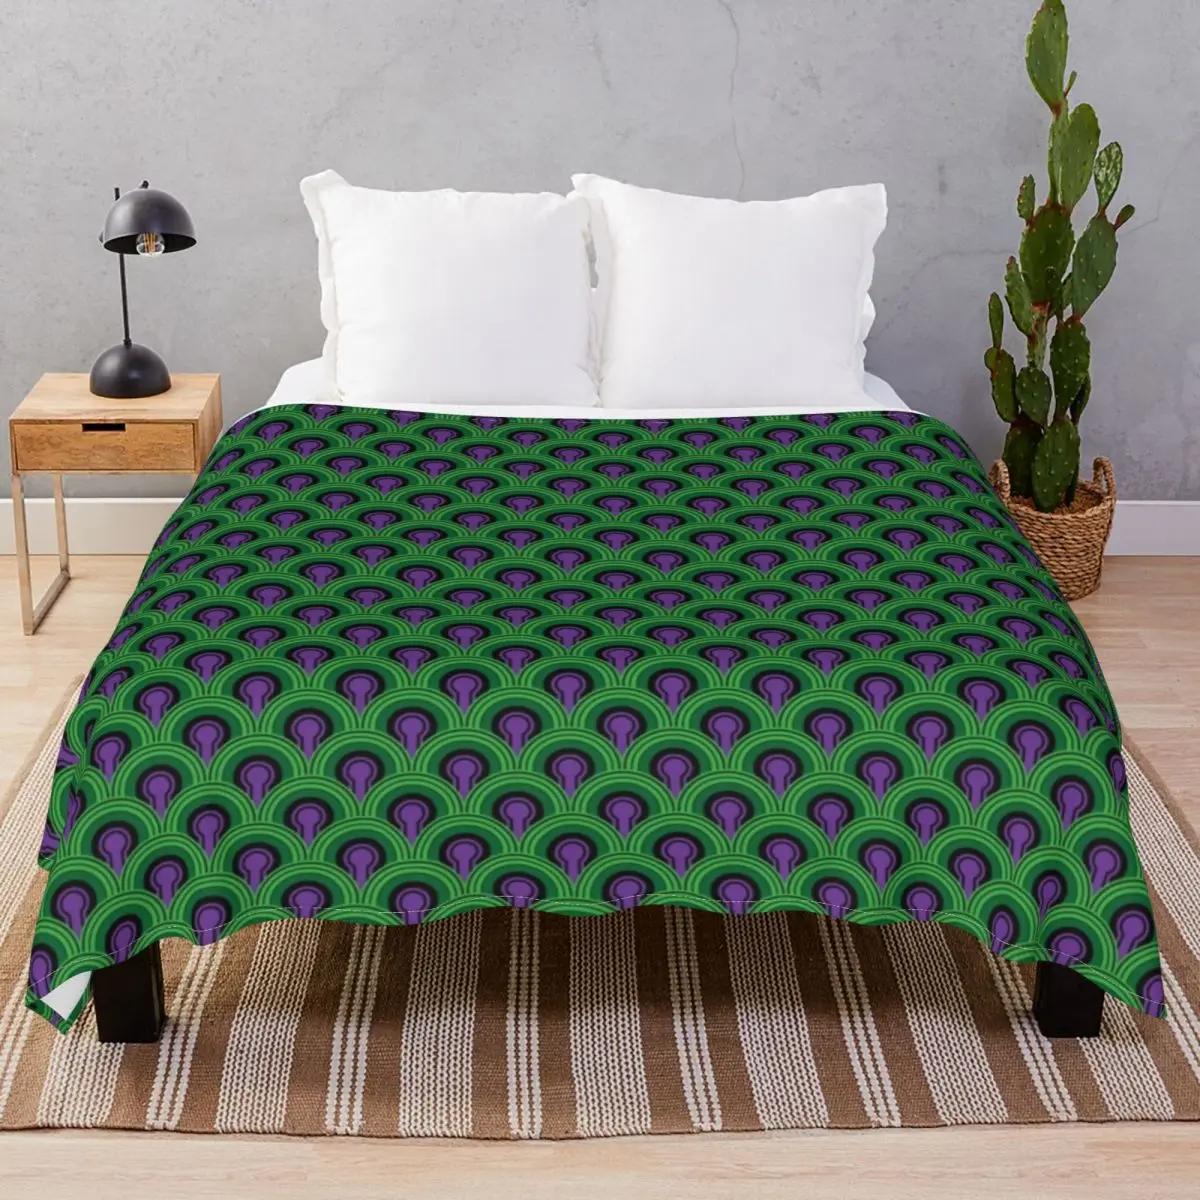 Vintage Green Carpet Blankets Fleece Winter Comfortable Throw Blanket for Bed Sofa Travel Cinema